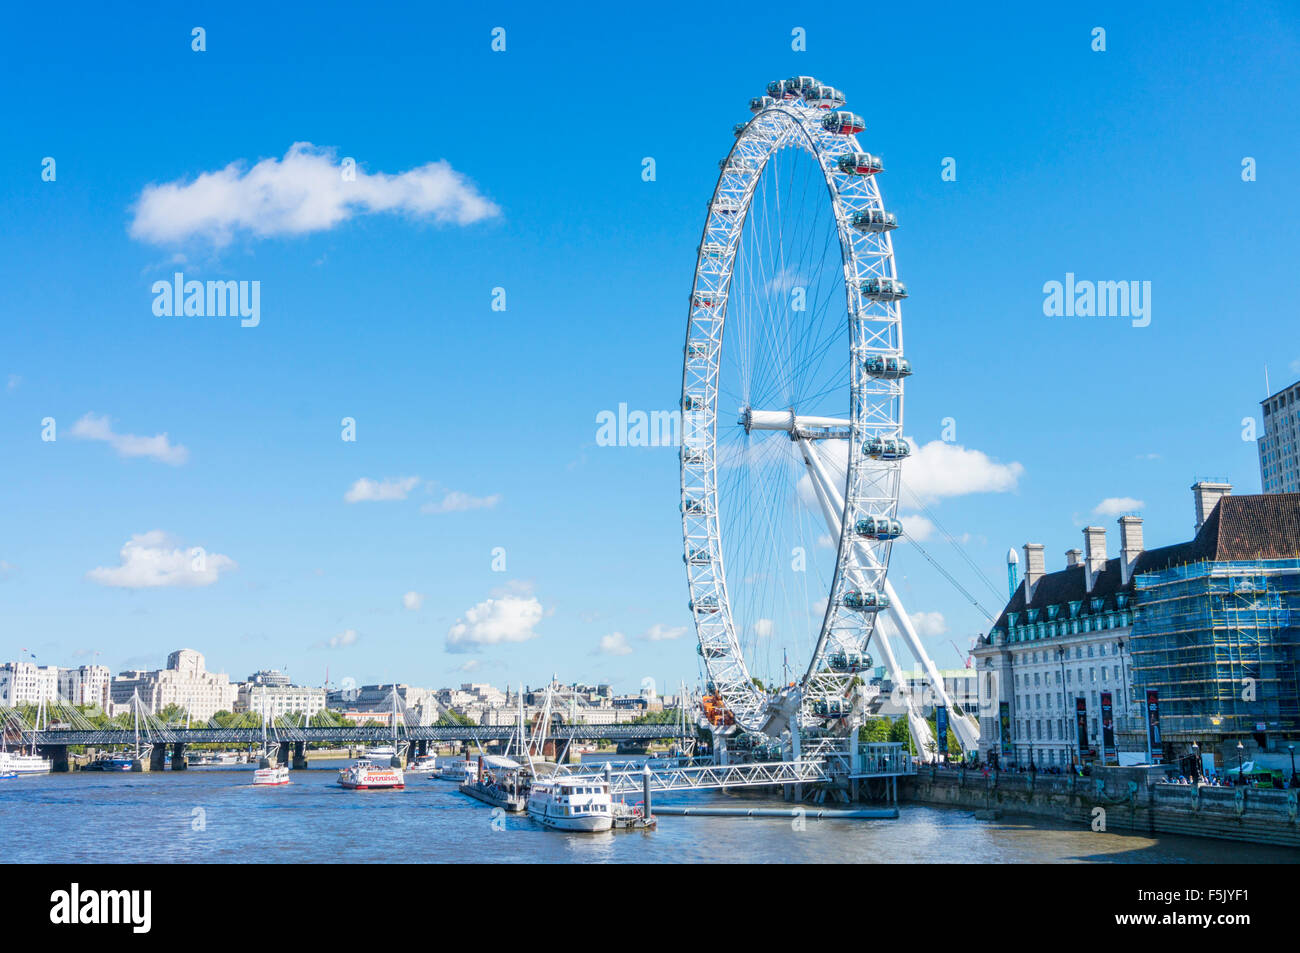 Die London Eye ein großes Riesenrad Karussell am Südufer des Flusses Themse London England GB UK EU Europa Stockfoto